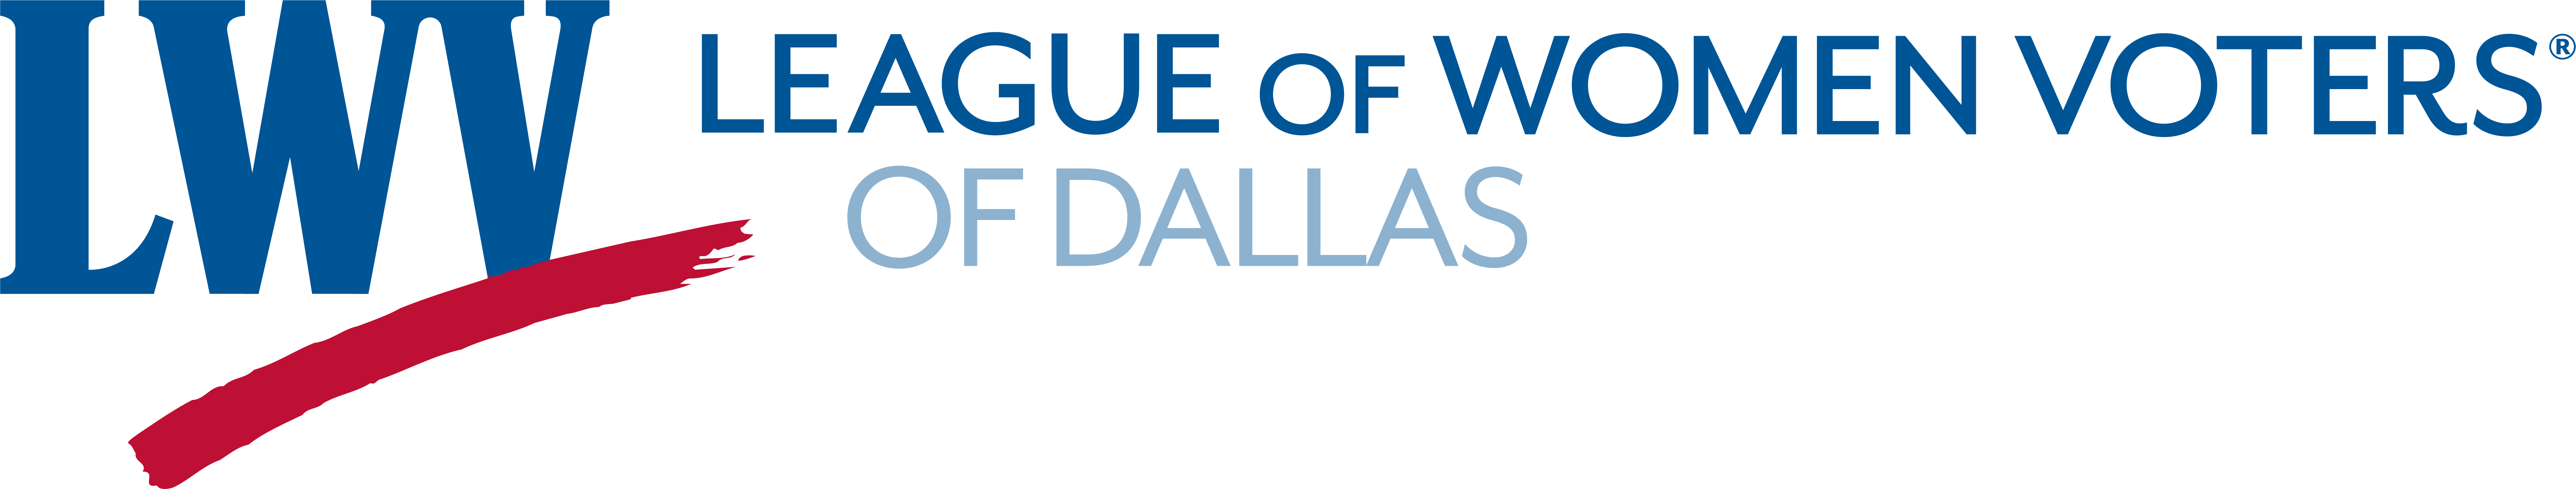 League of Women Voters of Dallas